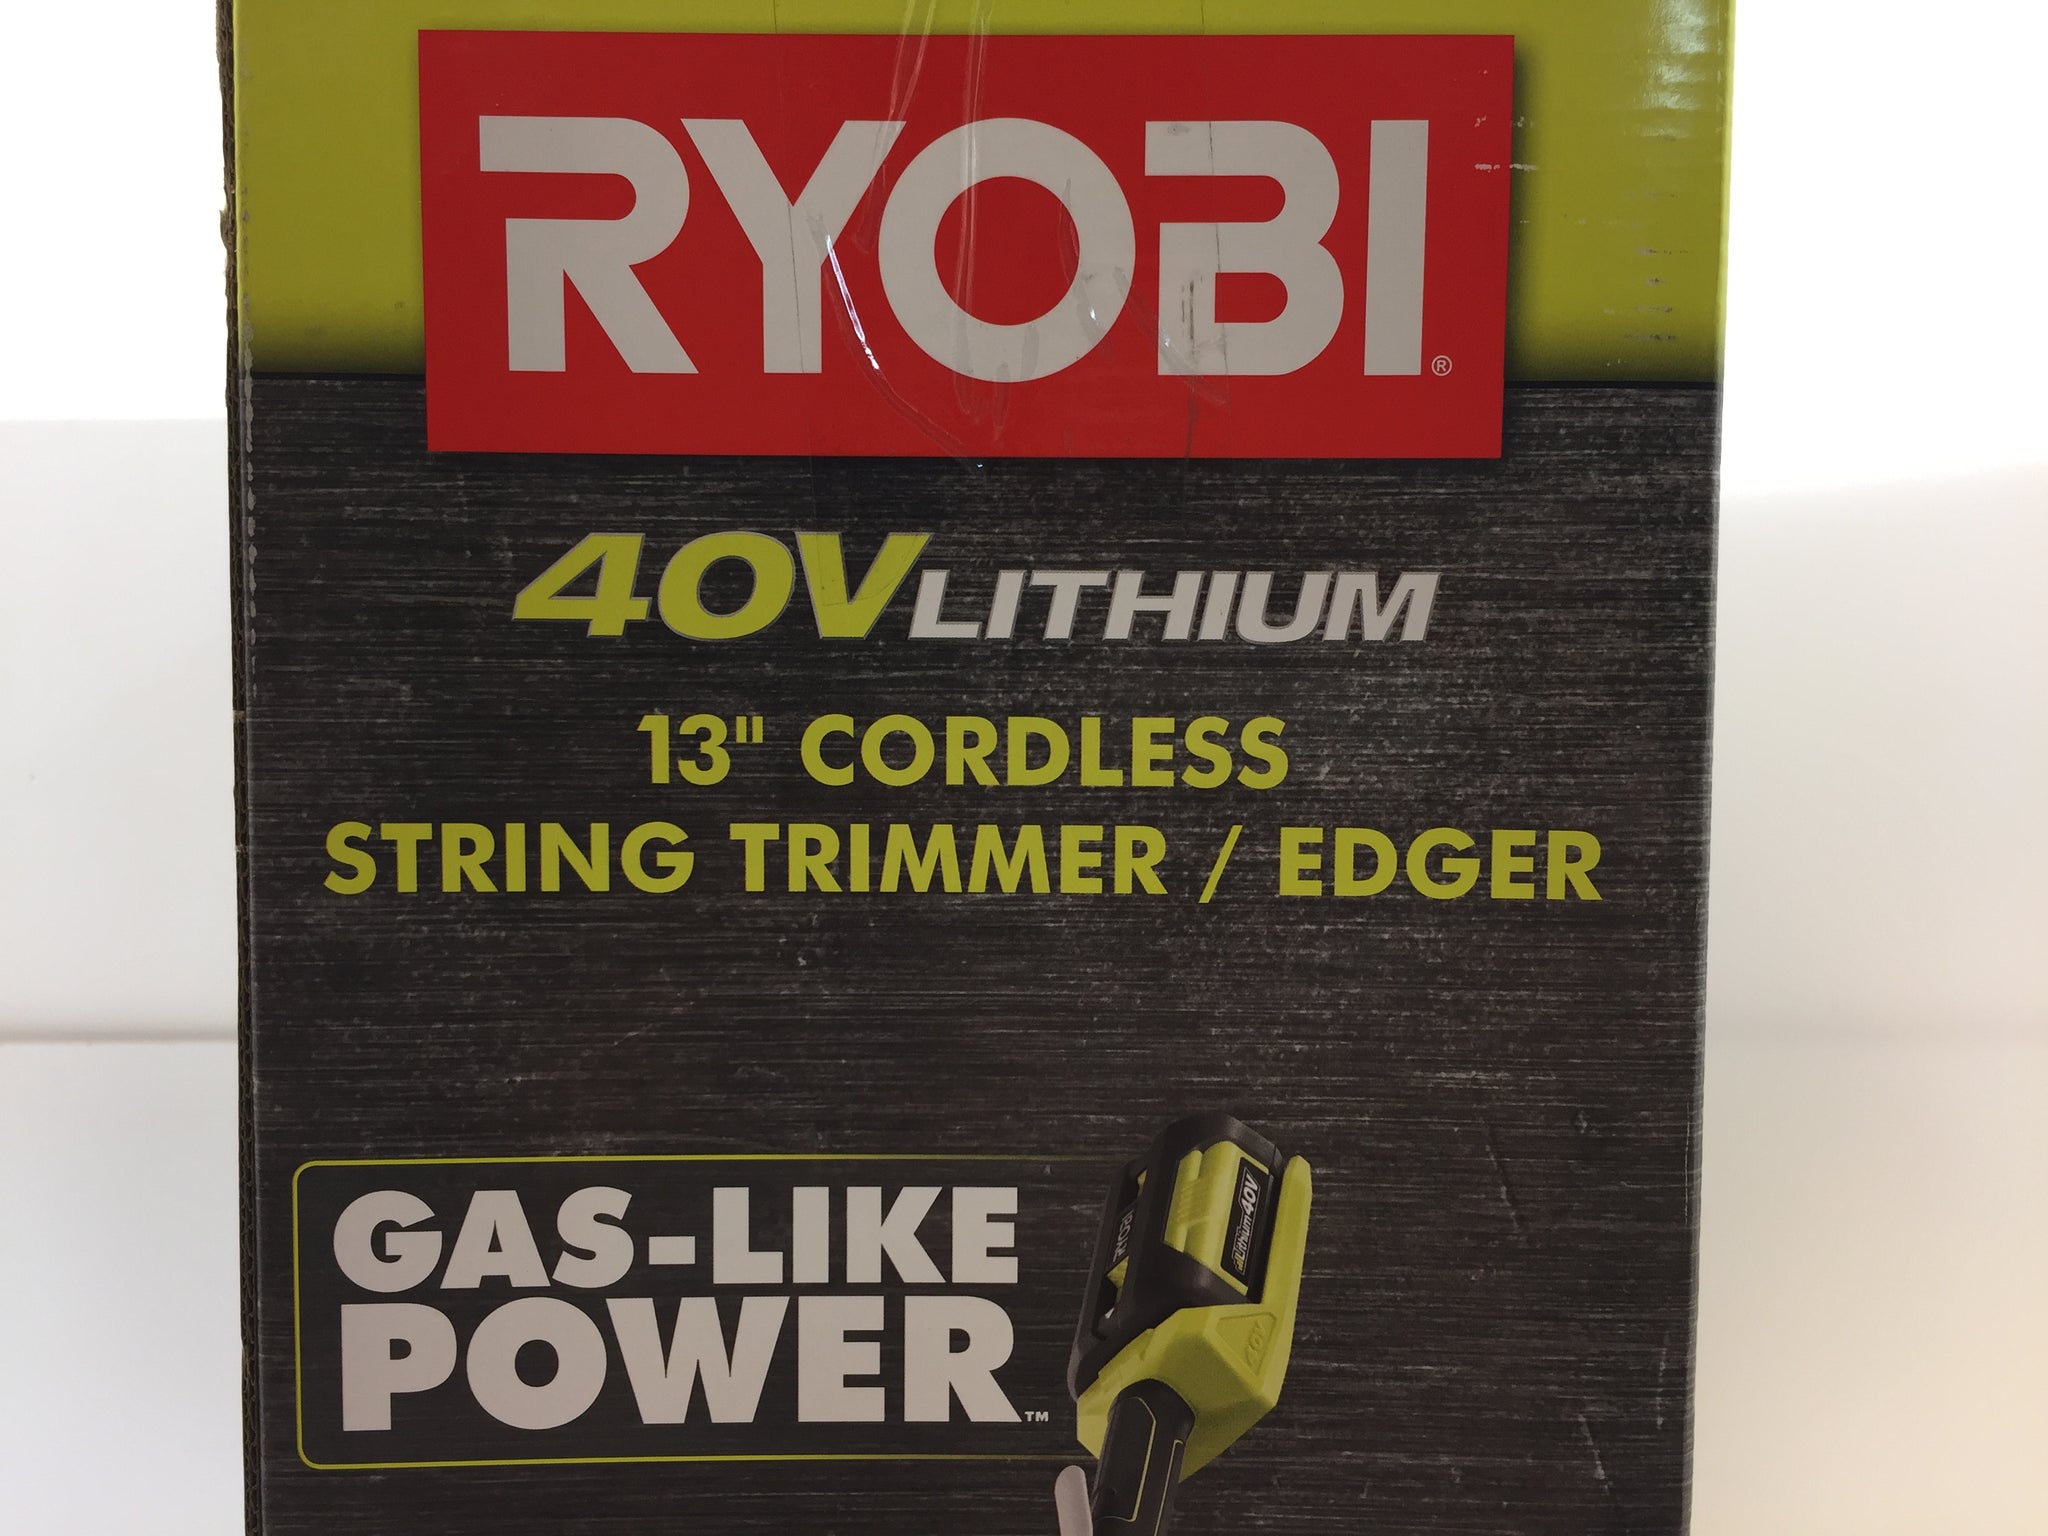 RYOBI 40-Volt Lithium-Ion Cordless Battery String Trimmer/Edger